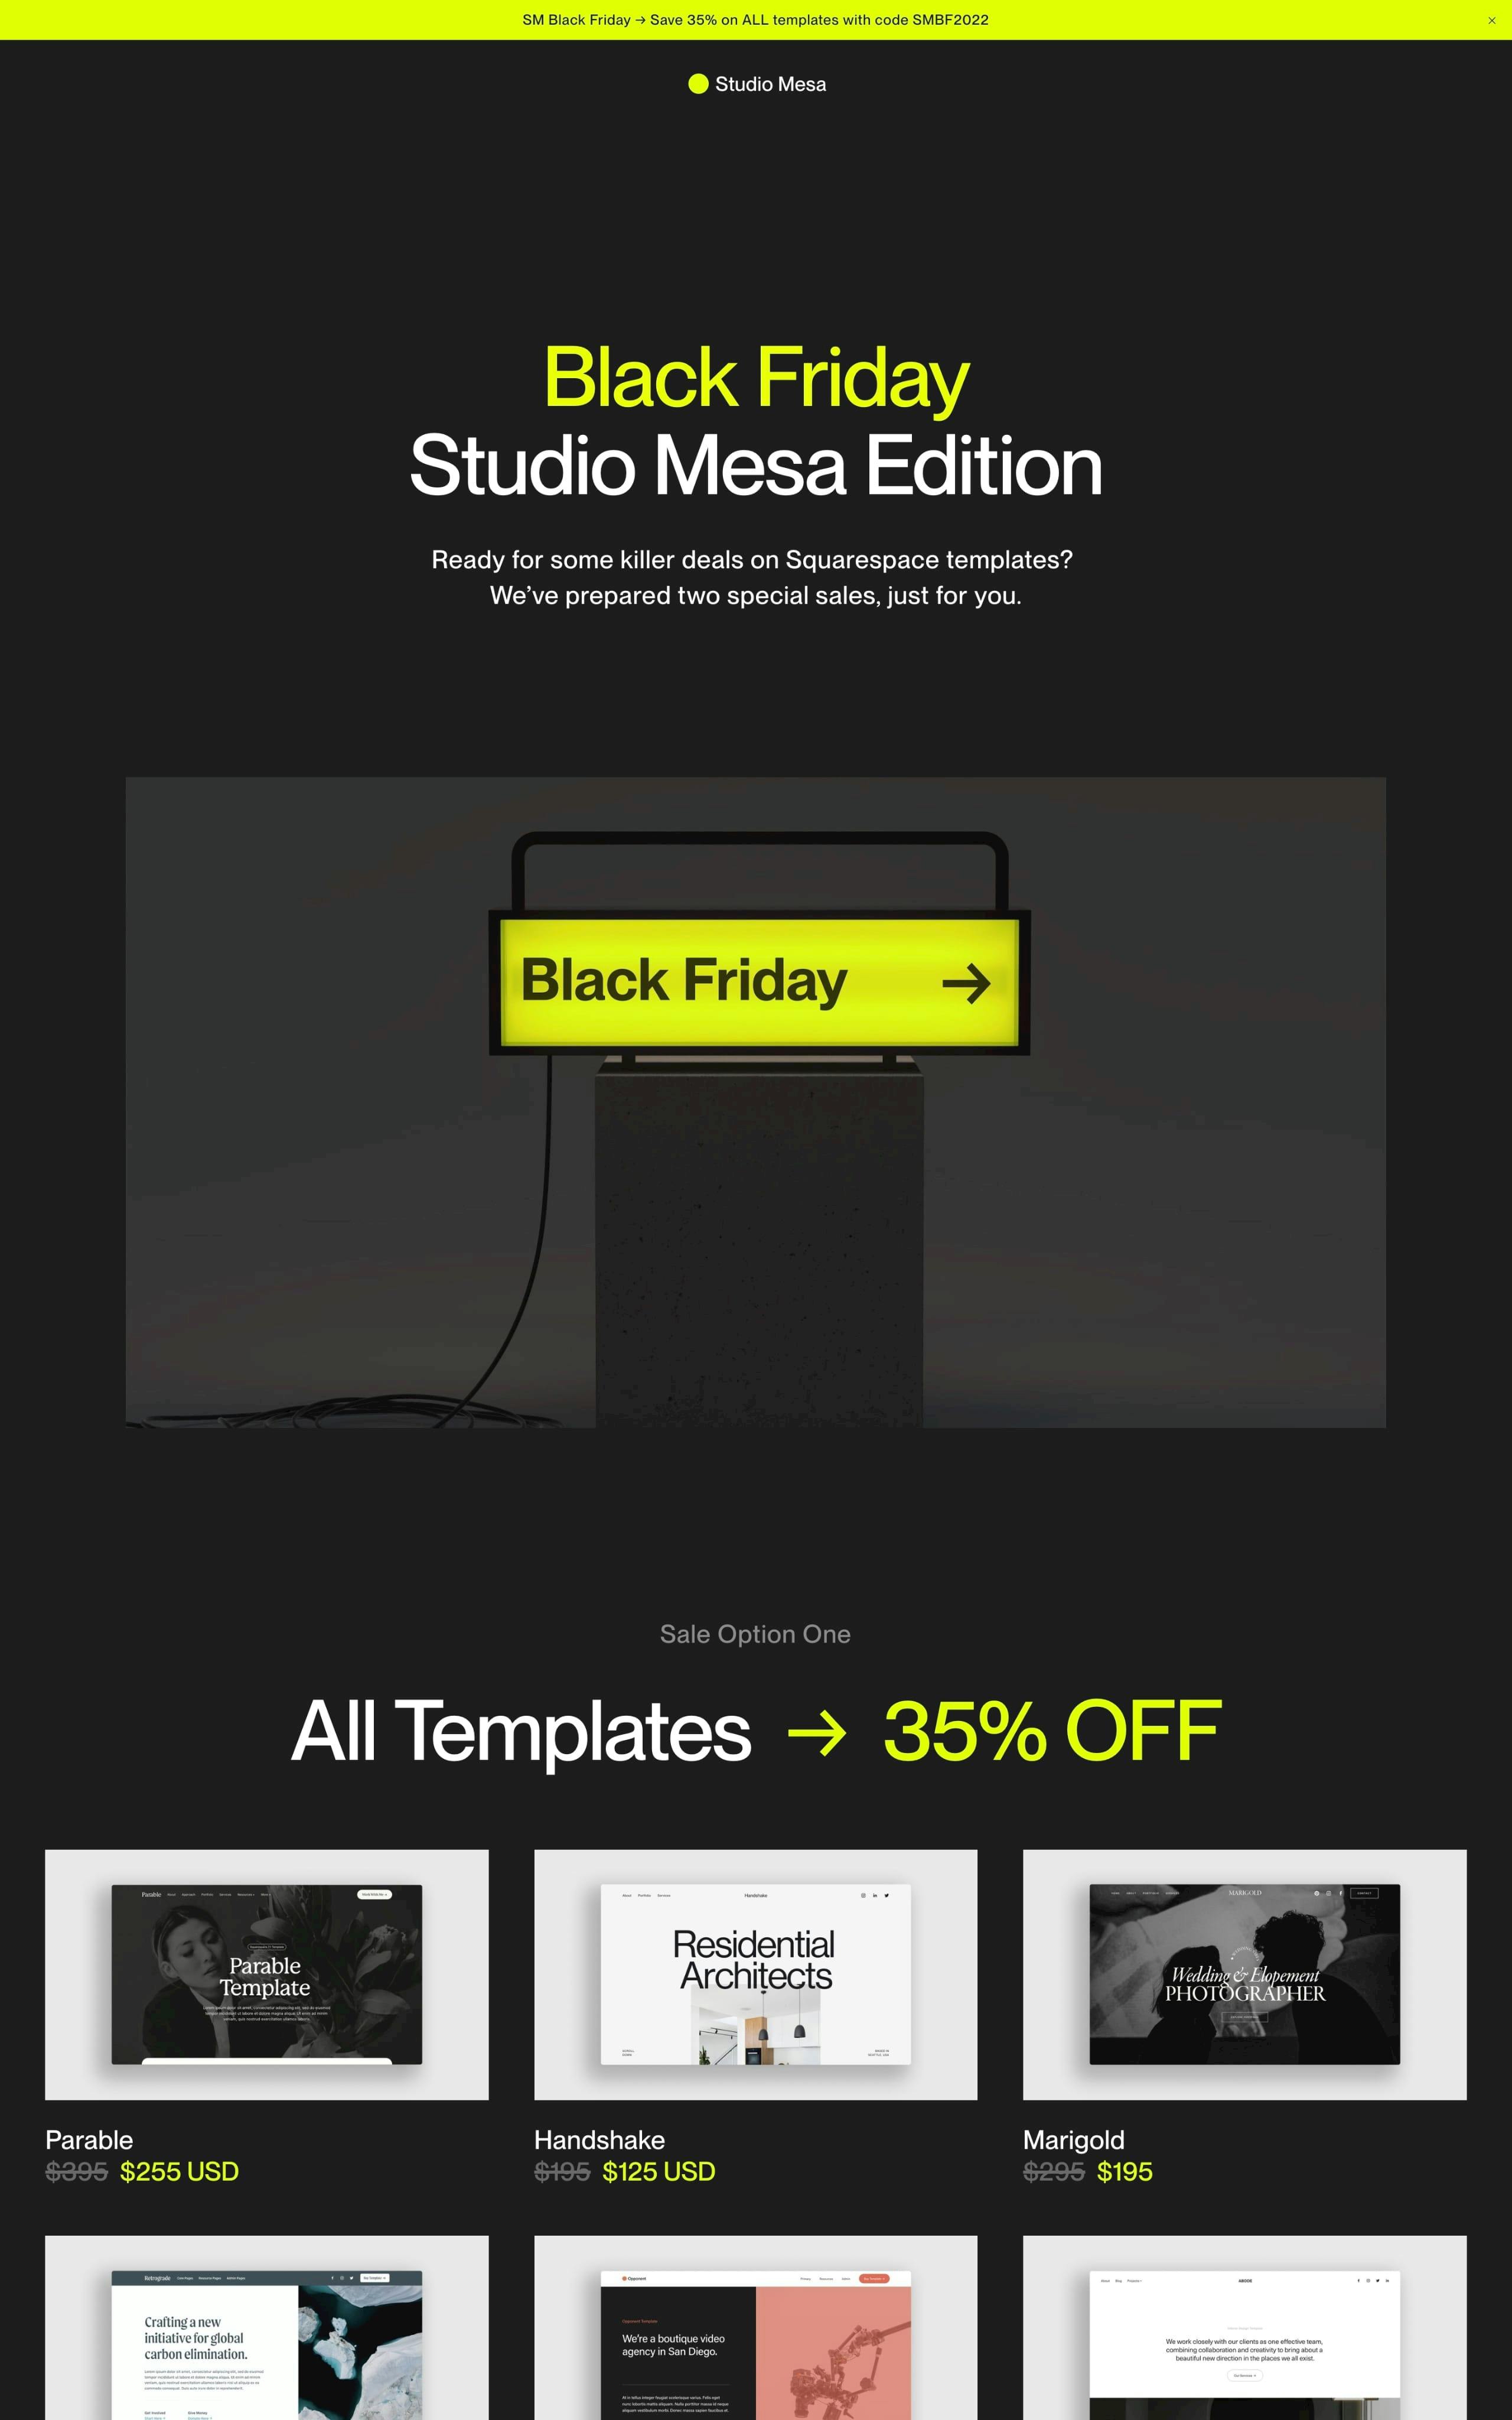 Studio Mesa Black Friday Website Screenshot